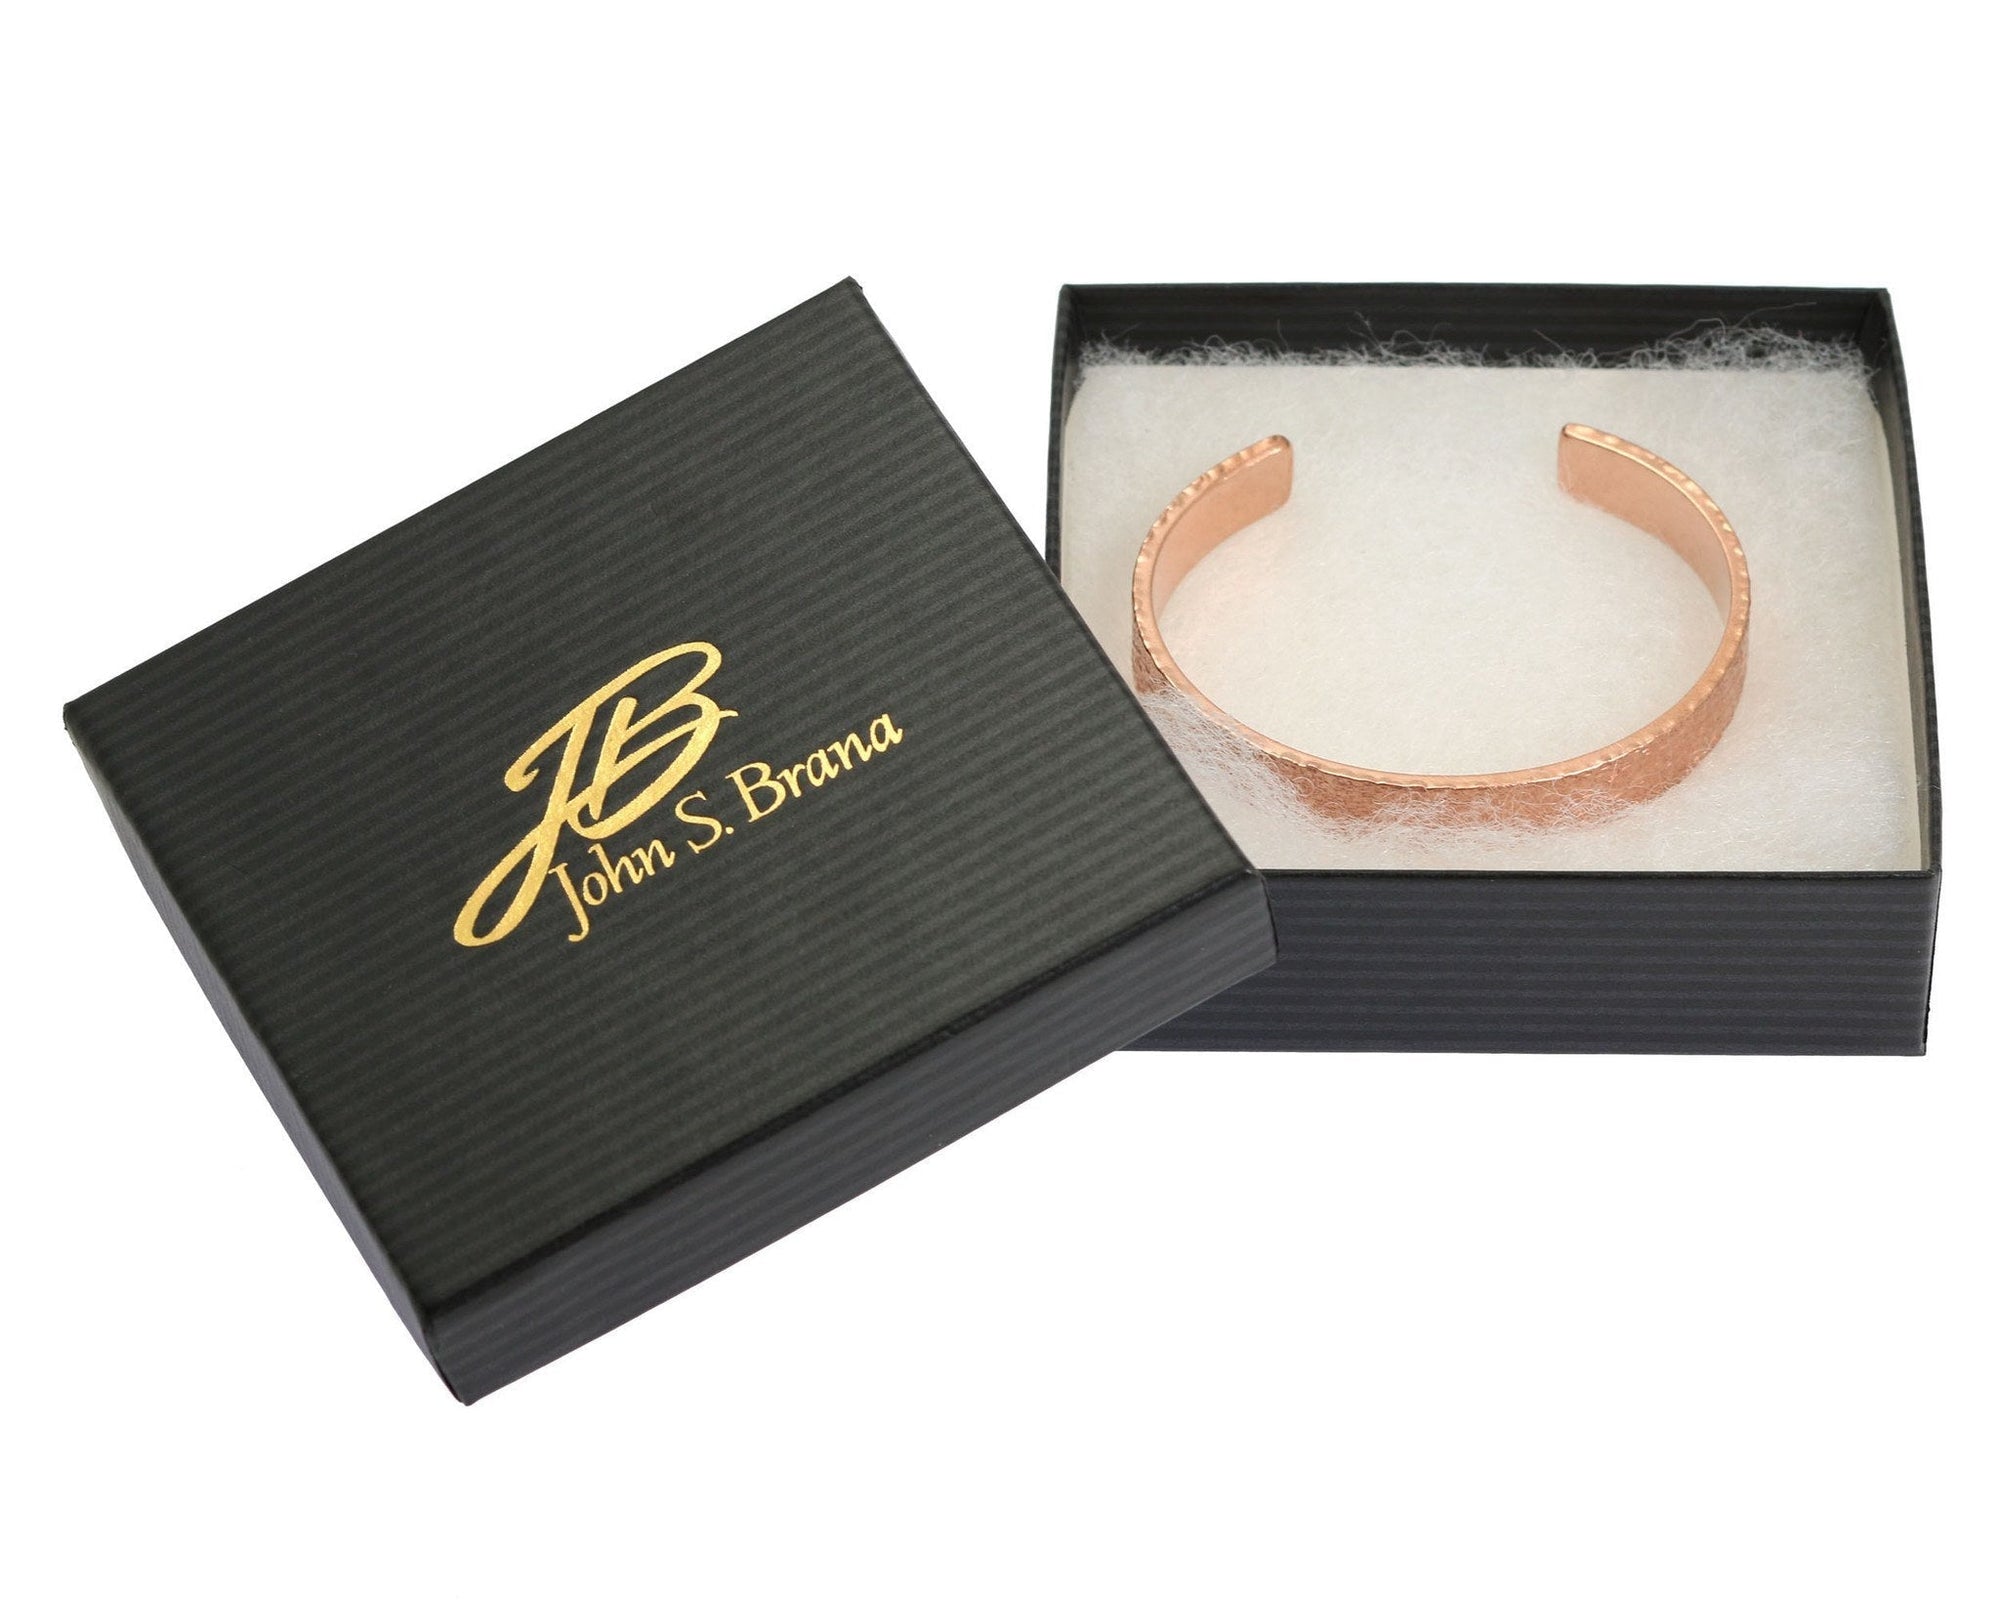 10mm Wide Texturized Copper Cuff Bracelet in Black Gift Box